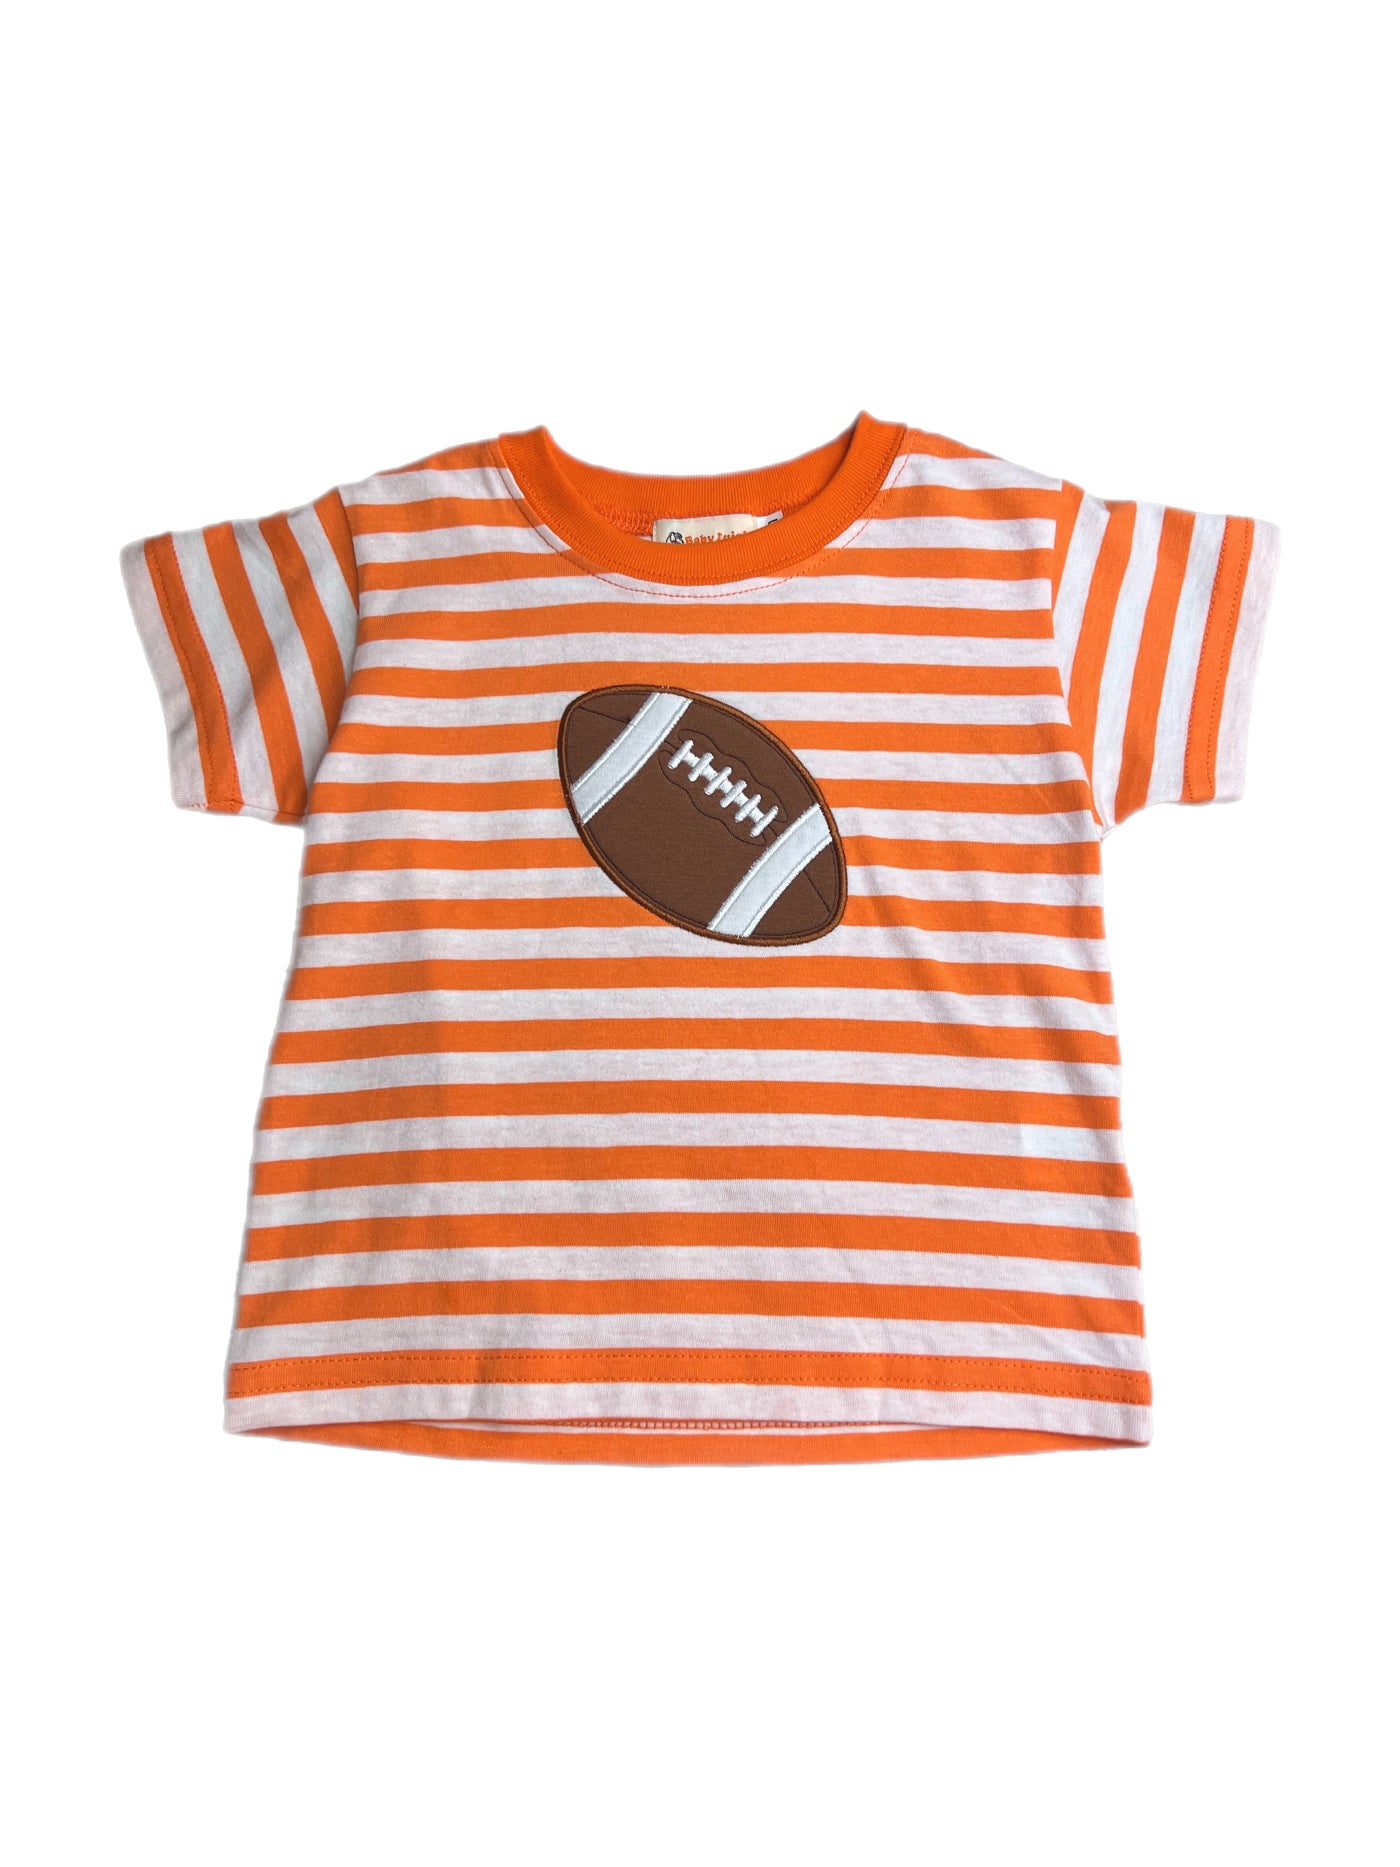 Short Sleeve Orange Stripe Football Shirt